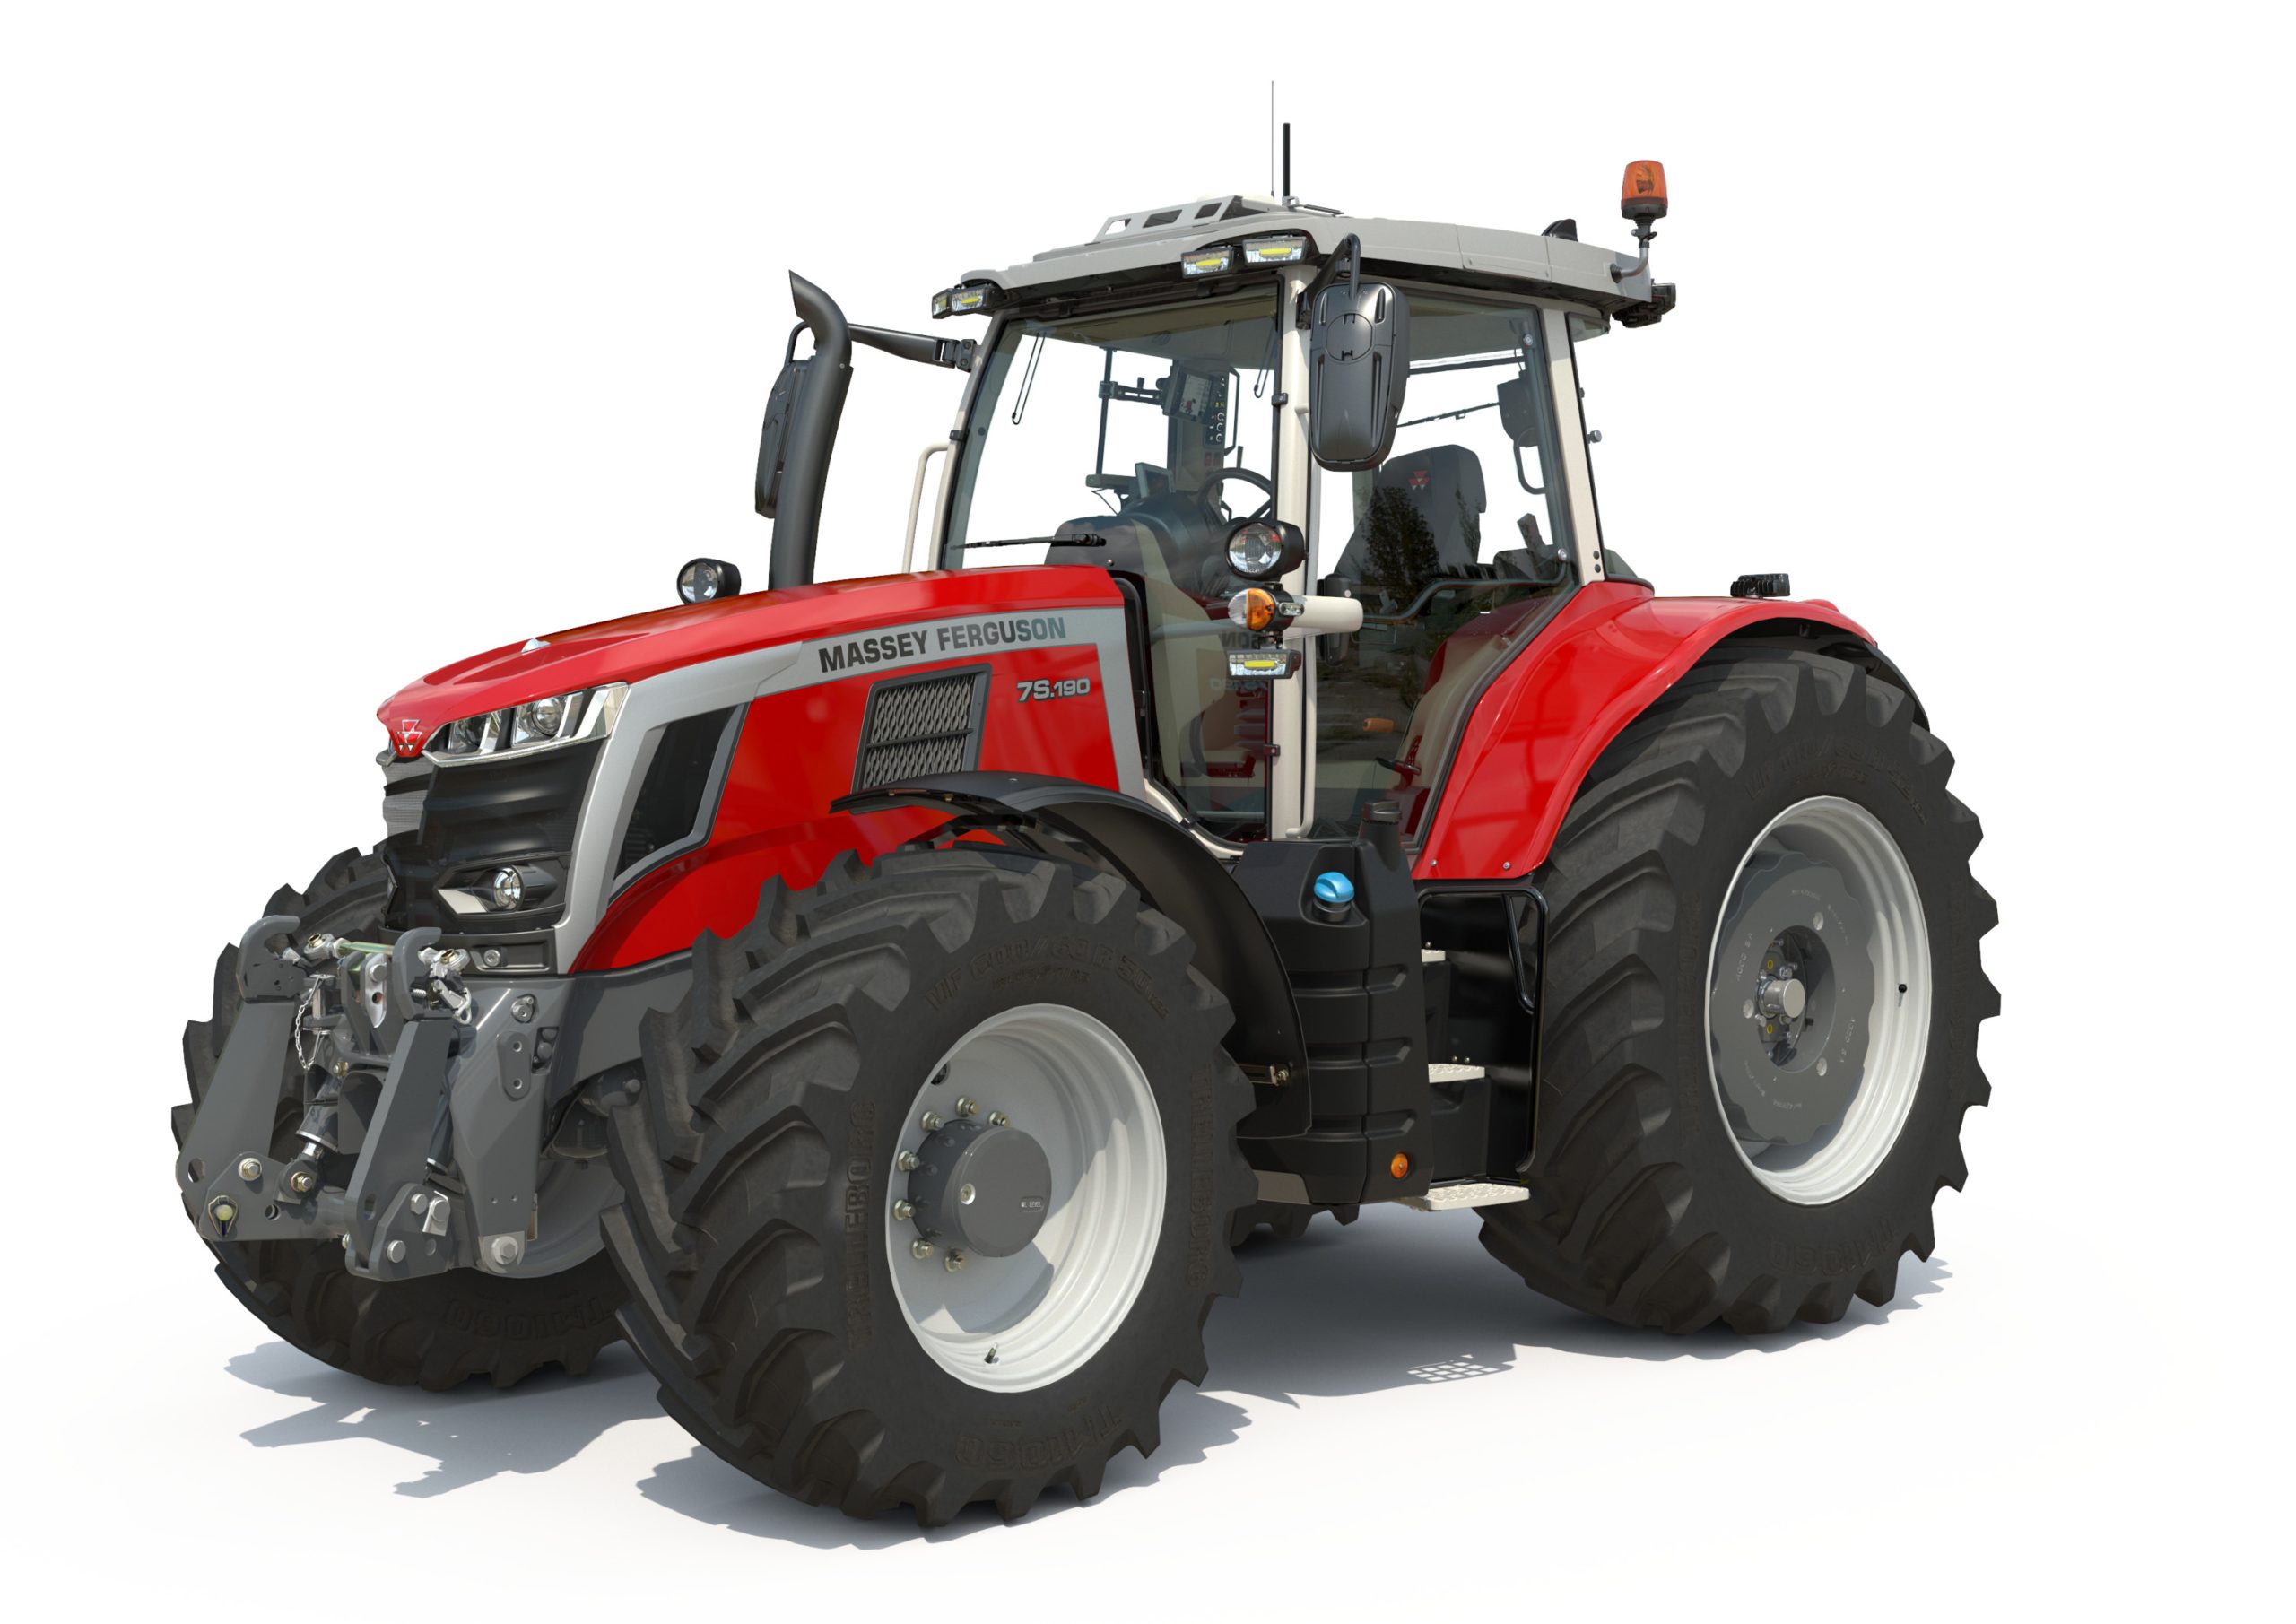 Massey Ferguson Tractors – Model Series Comparison